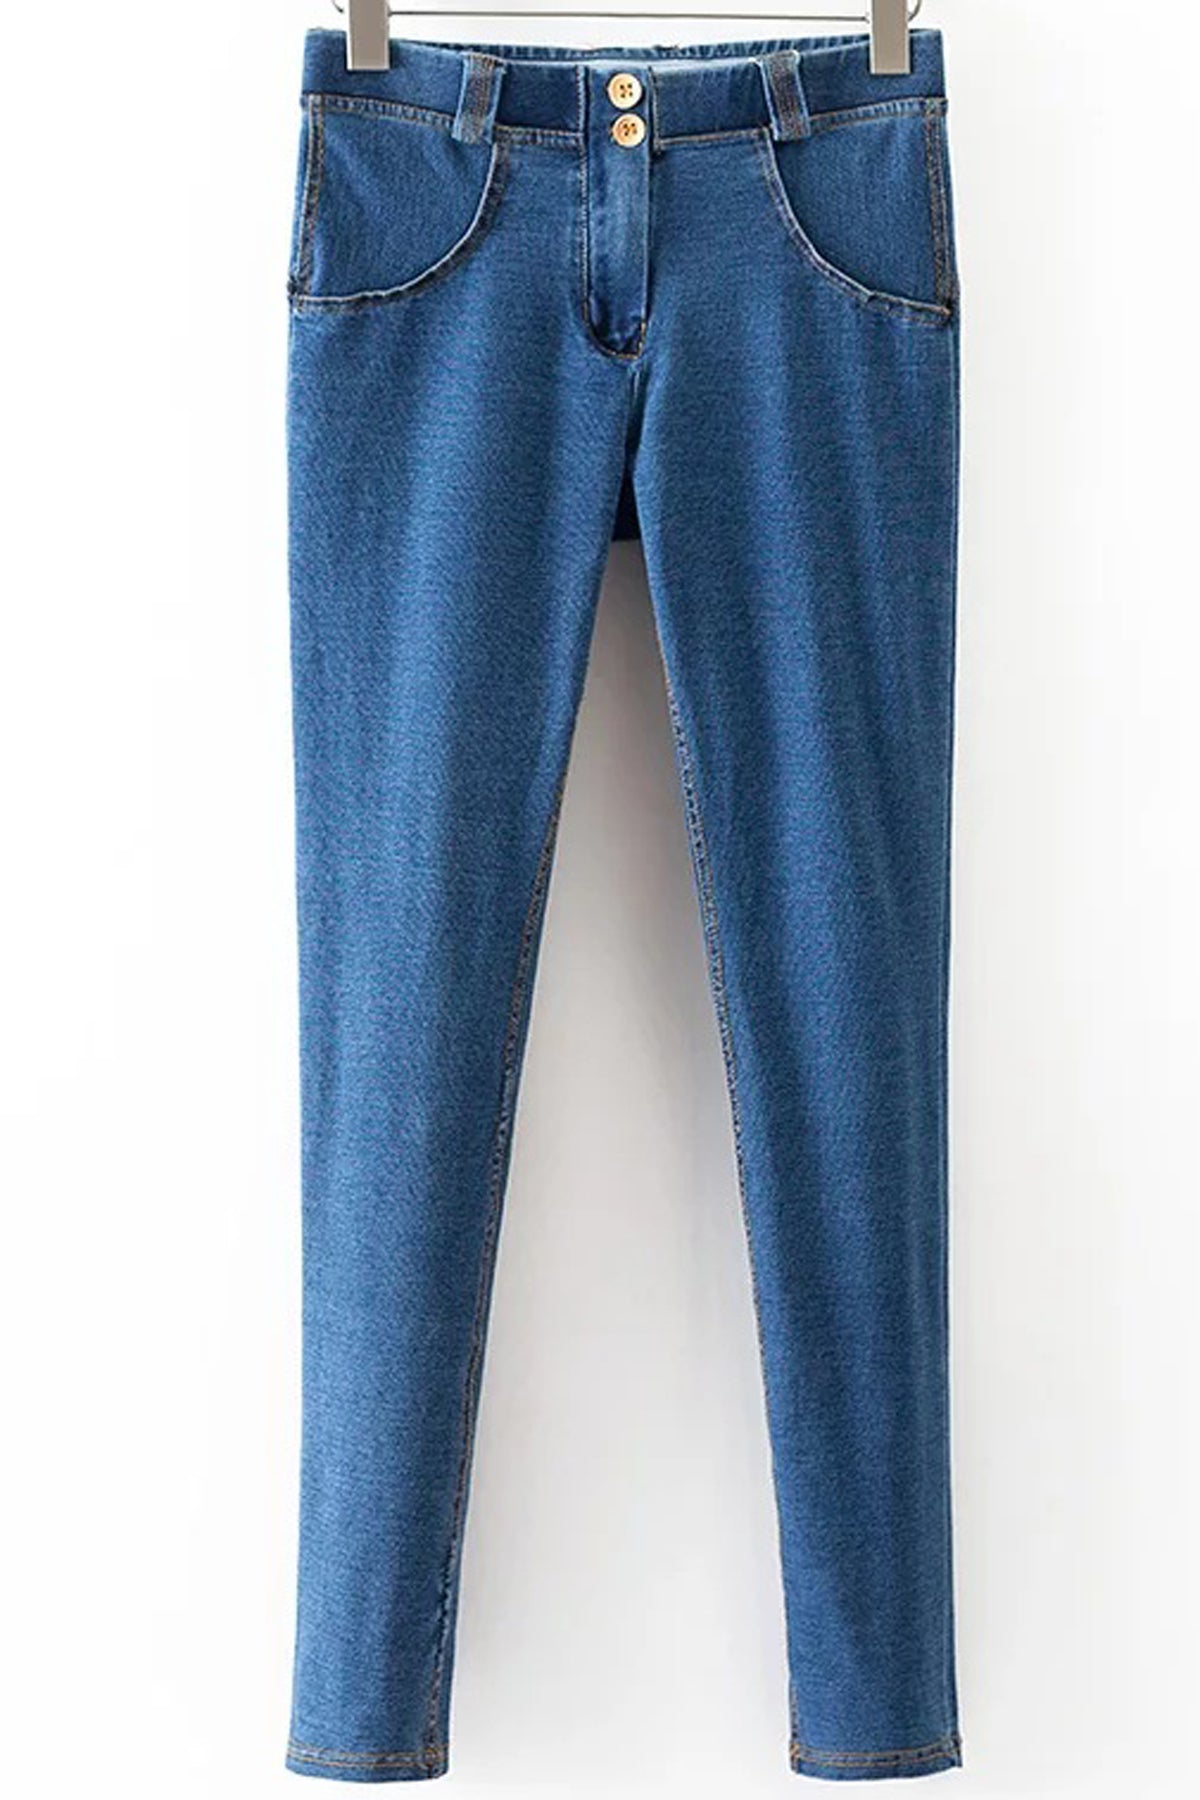 Patchwork Low Waist Solid Color Long Skinny Pants Jeans